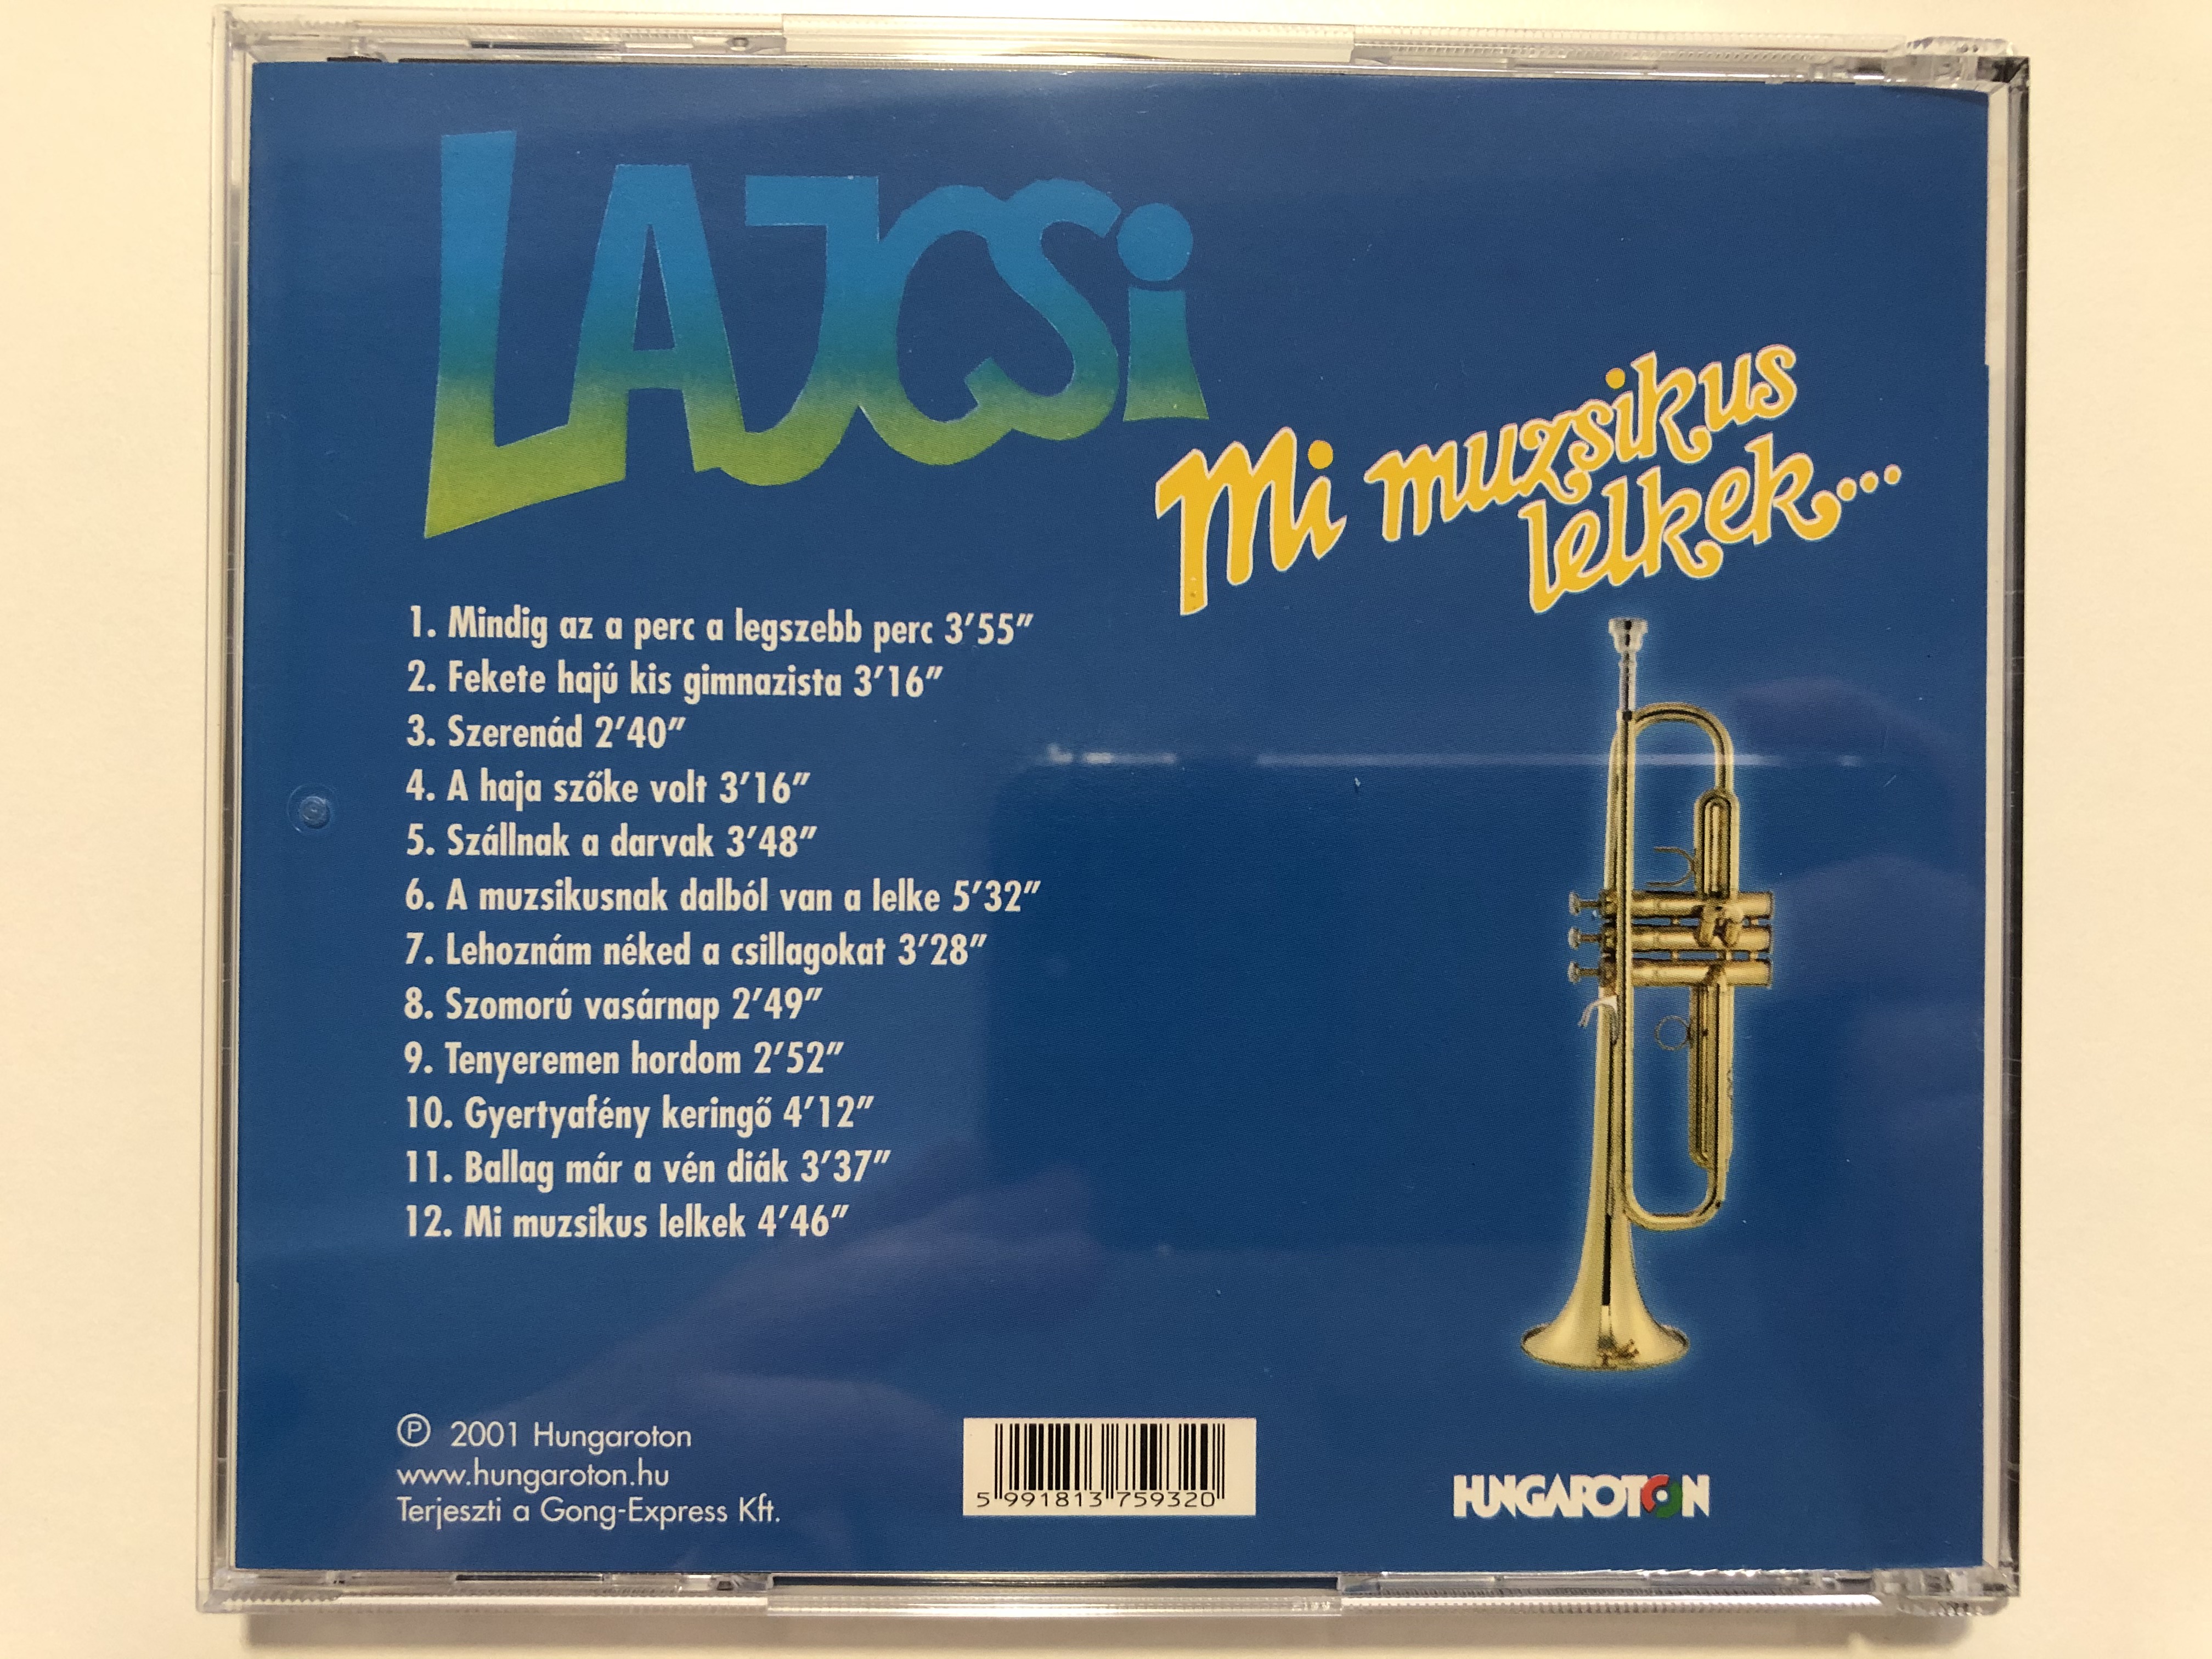 Lajcsi - Mi muzsikus lelkek... / Trombitaszolok, orokzold dalok / Lagzi  Lajcsi 8 / Hungaroton Audio CD 2001 / HCD 37593